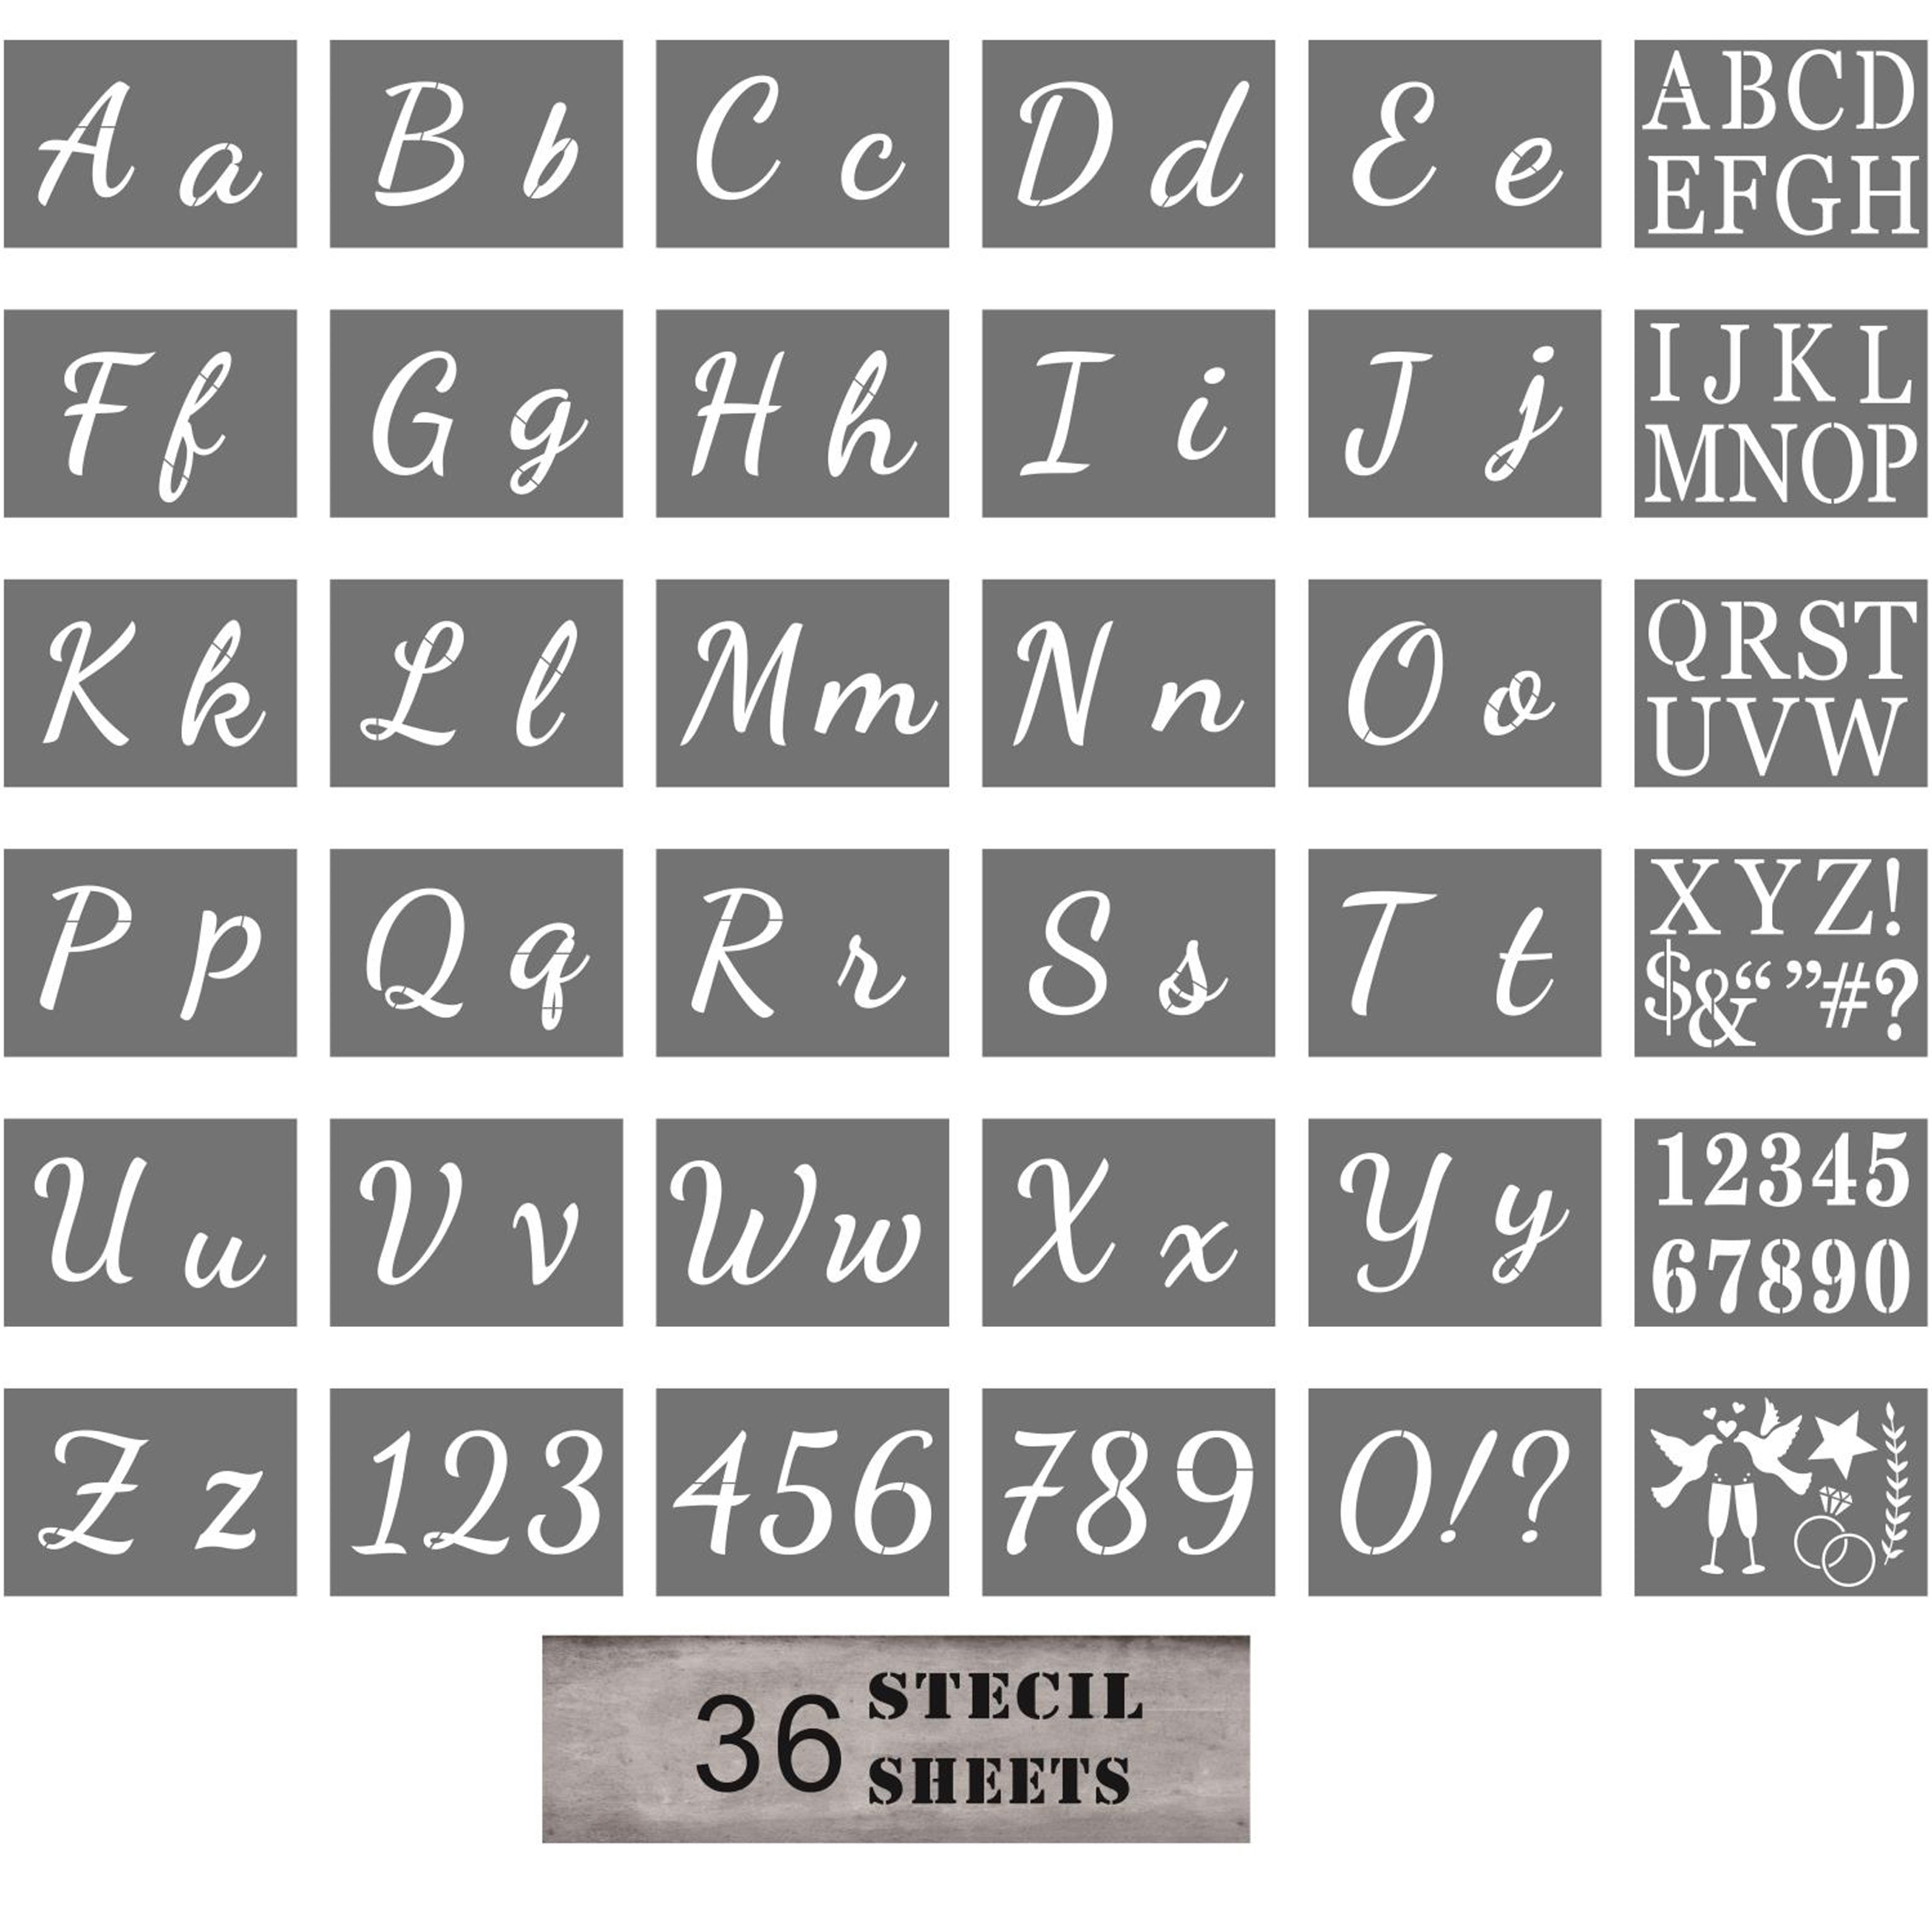 Letter, Number, and Alphabet Stencils